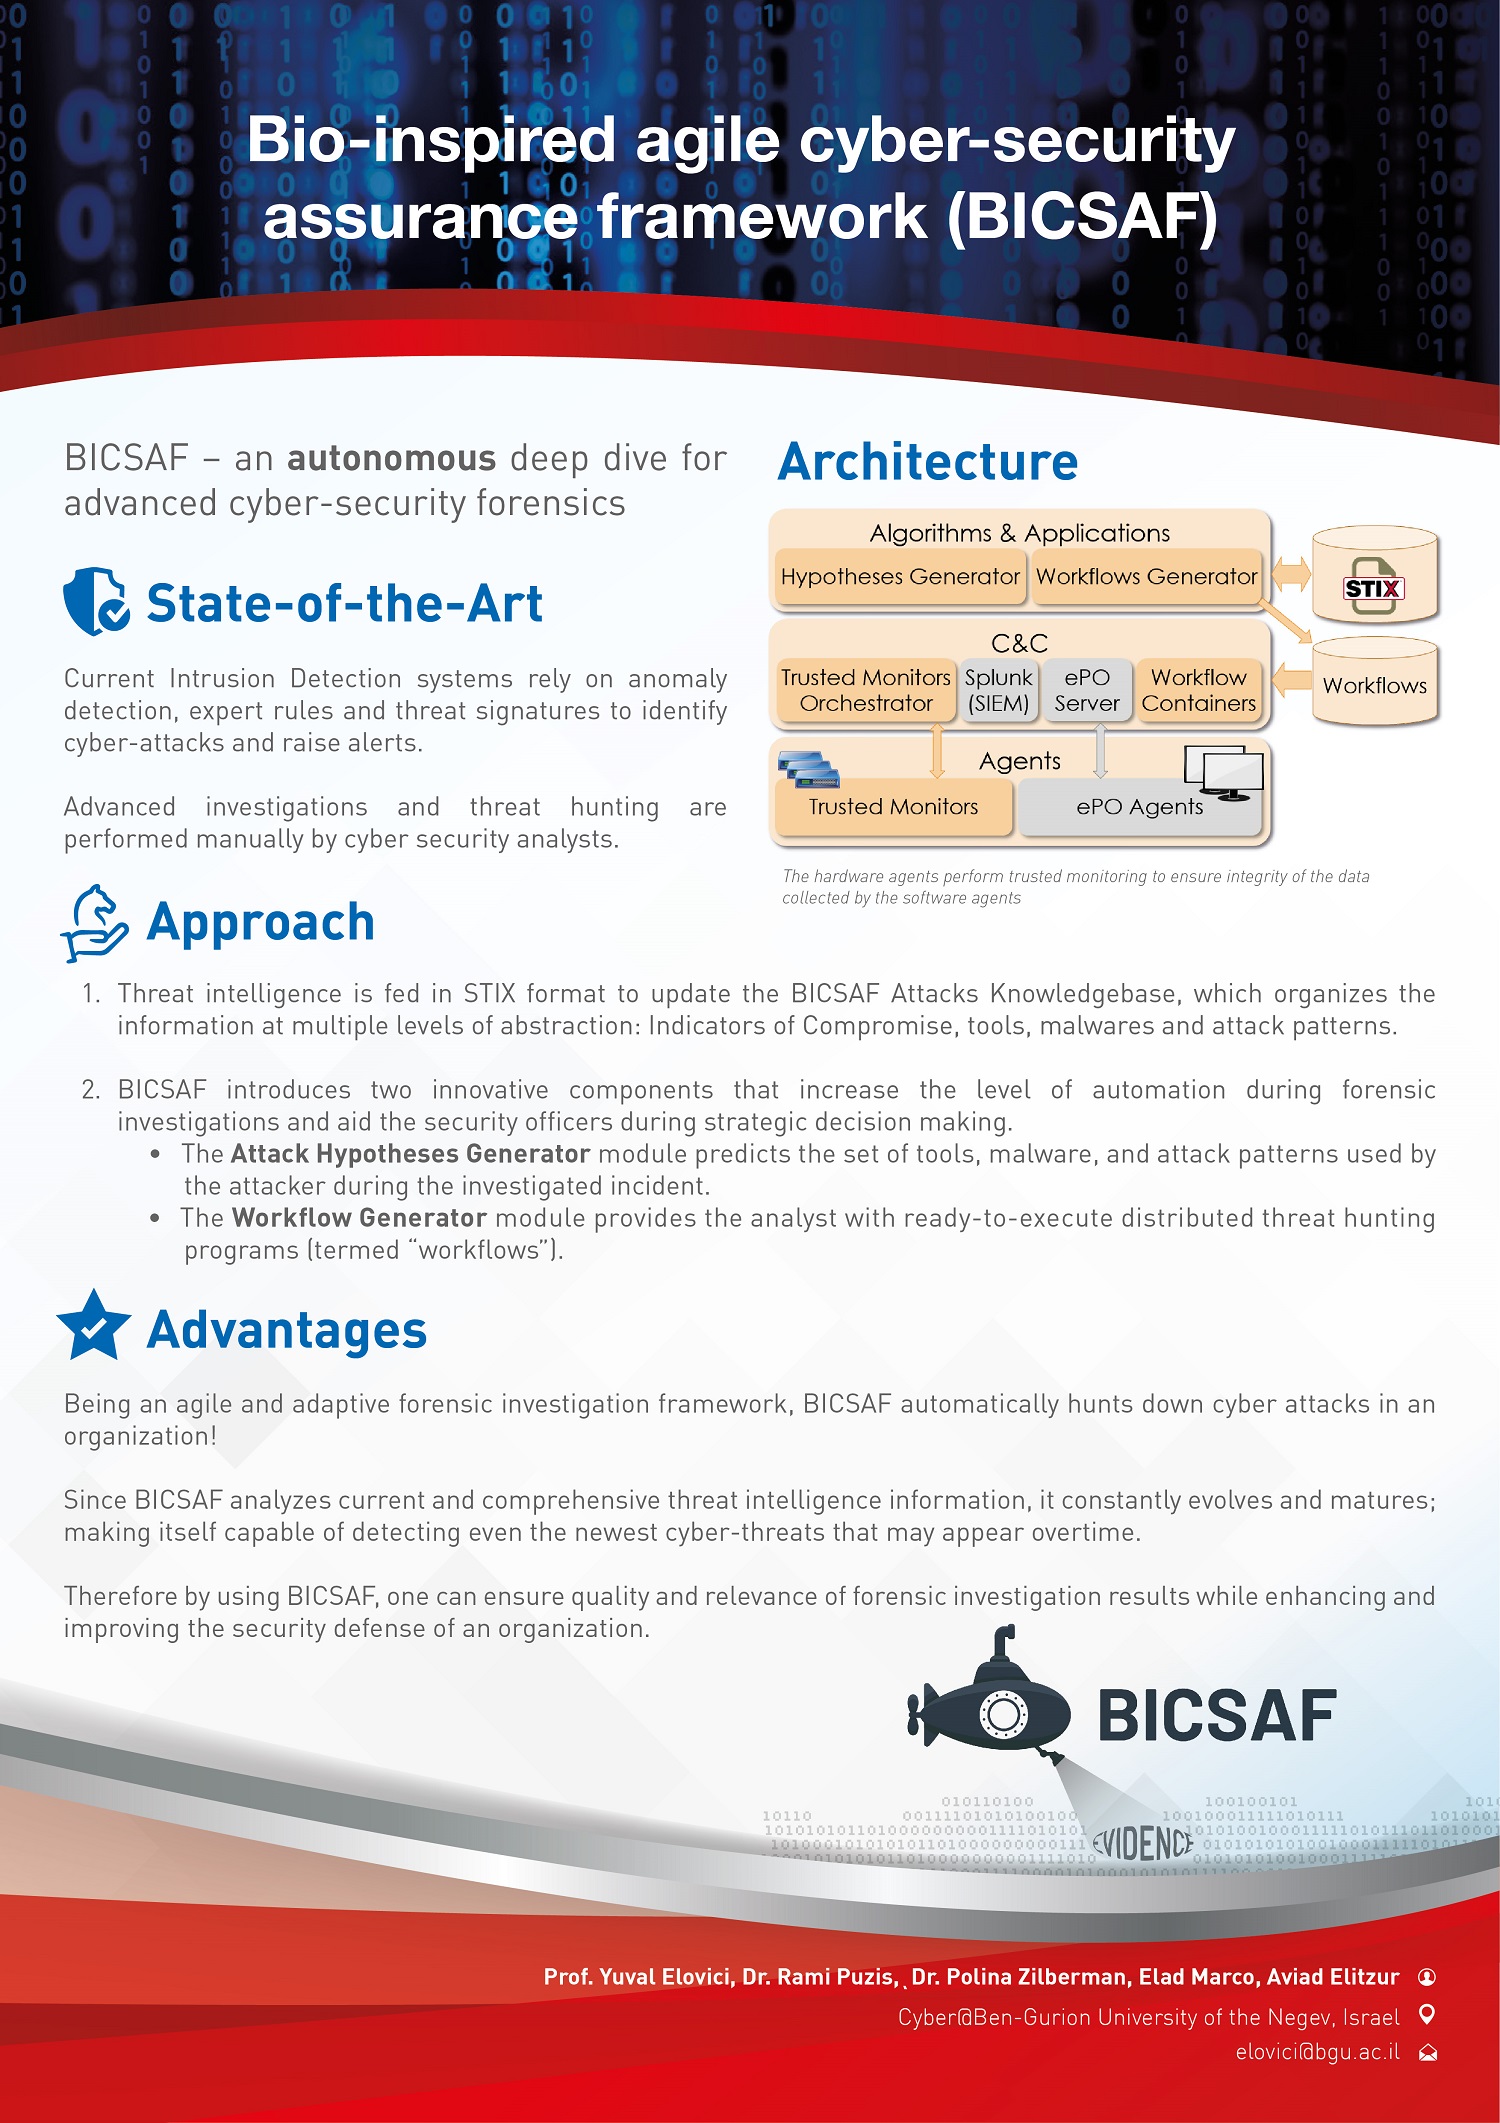 Bio-inspired agile cyber-security assurance framework (BICSAF)